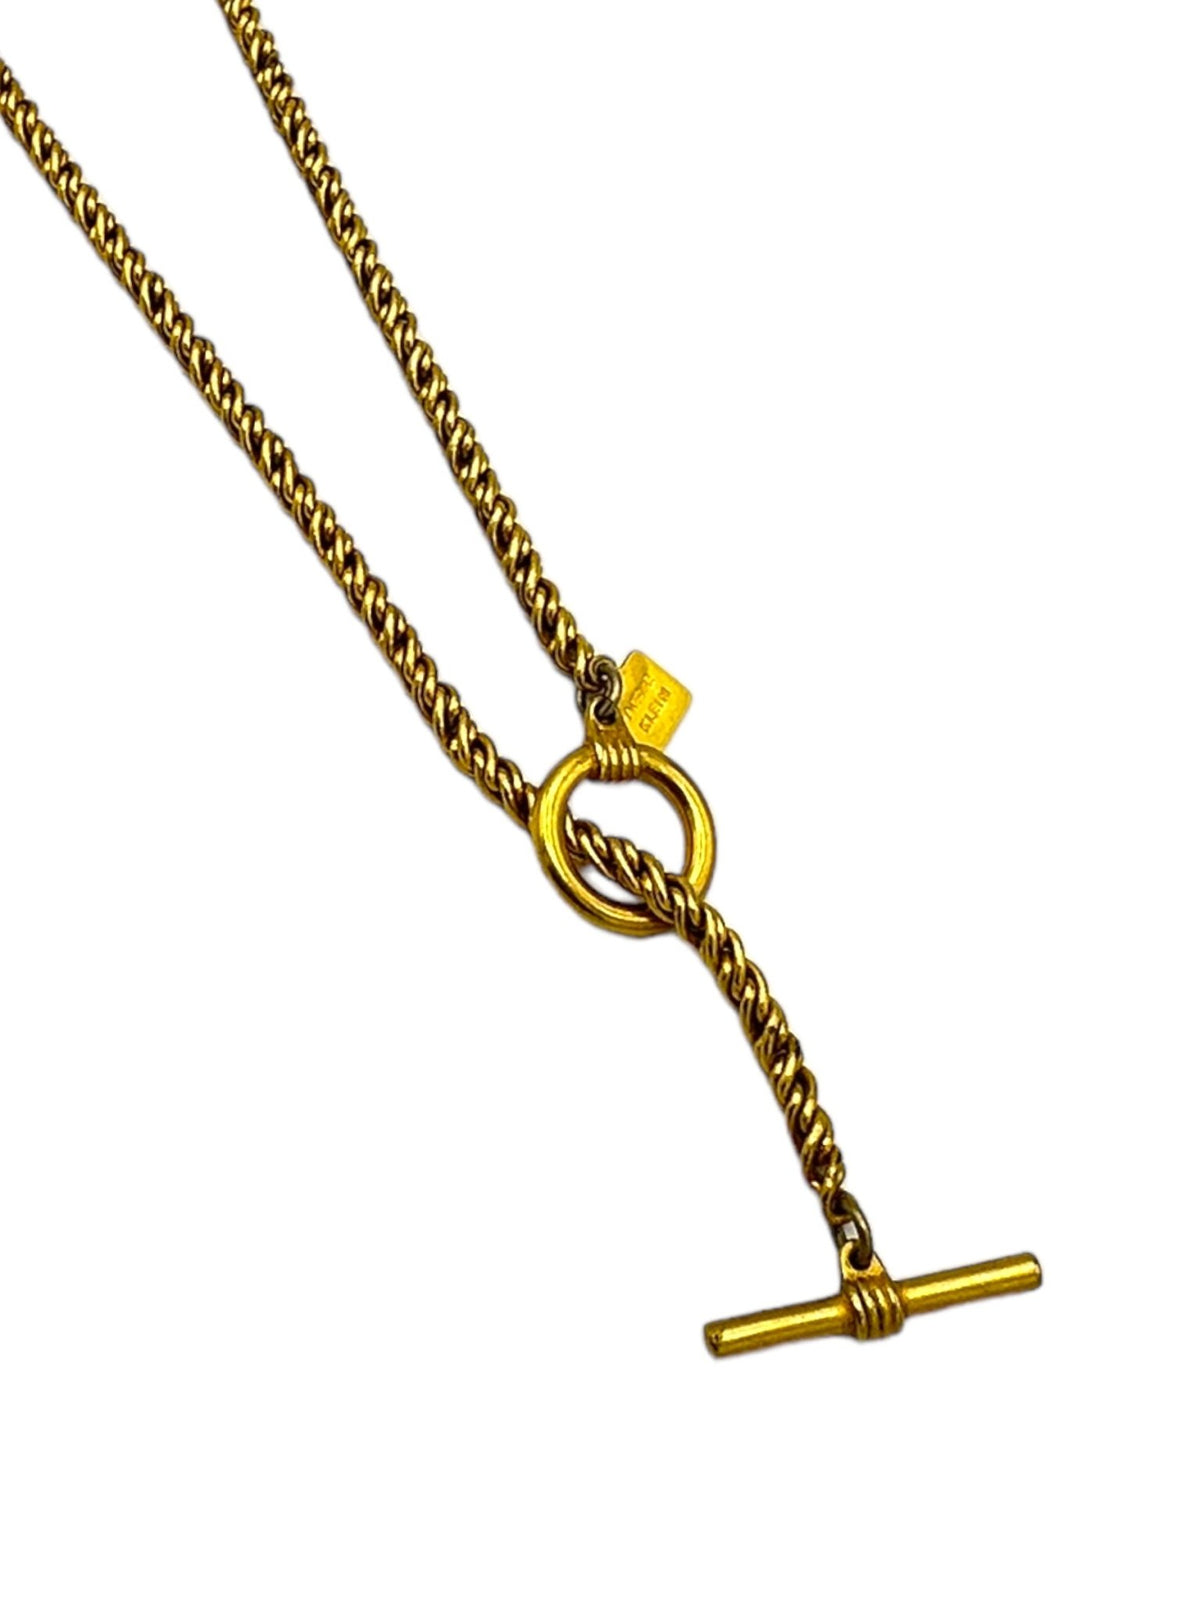 Anne Klein Signed Vintage Jewelry Matt Gold Layering Chain - 24 Wishes Vintage Jewelry